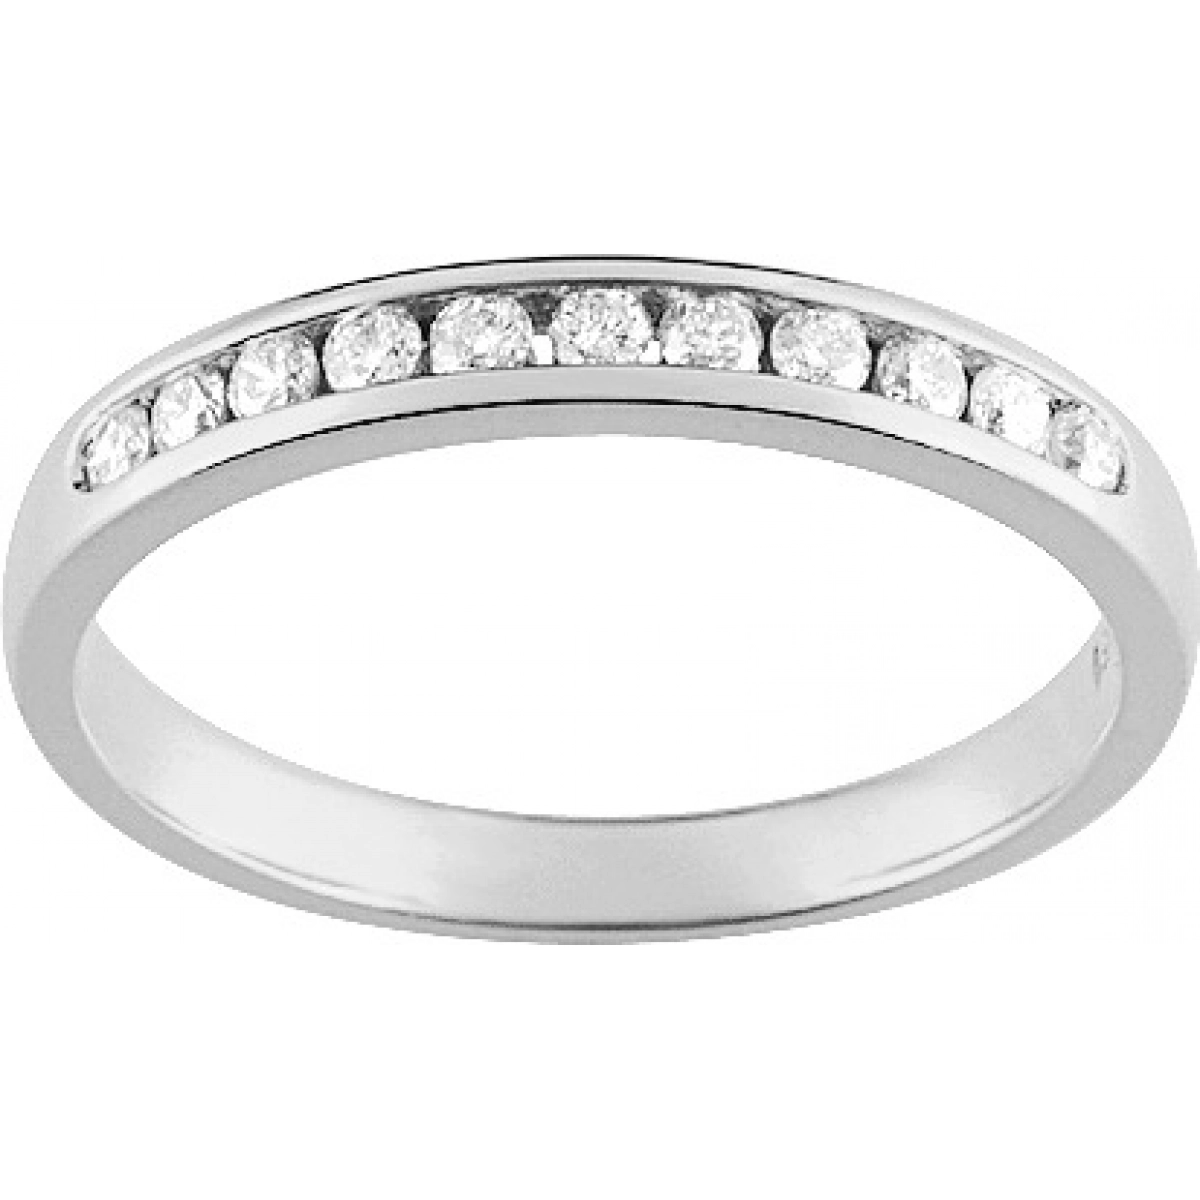 Wedding ring 11 diam 0.20ct 18K WG Lua Blanca  4N369MI0 - Size 55